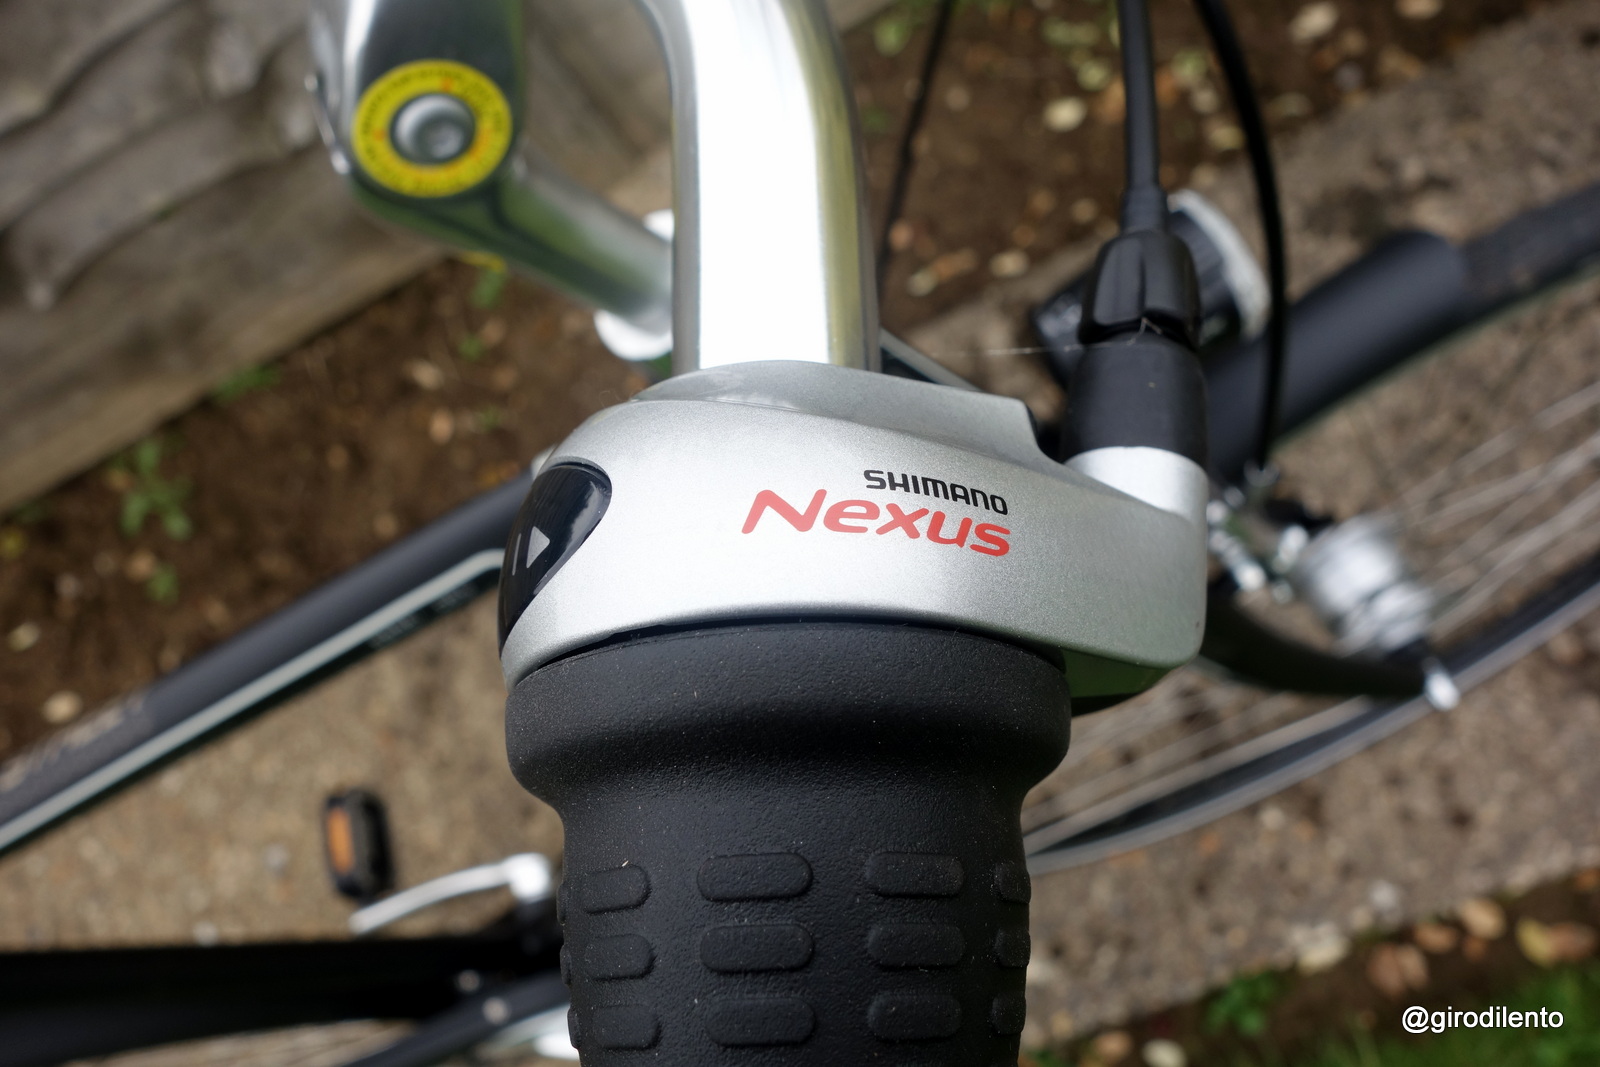 Shimano Nexus - proven low maintenance city bike drive train. The work horse of mass cycling countries